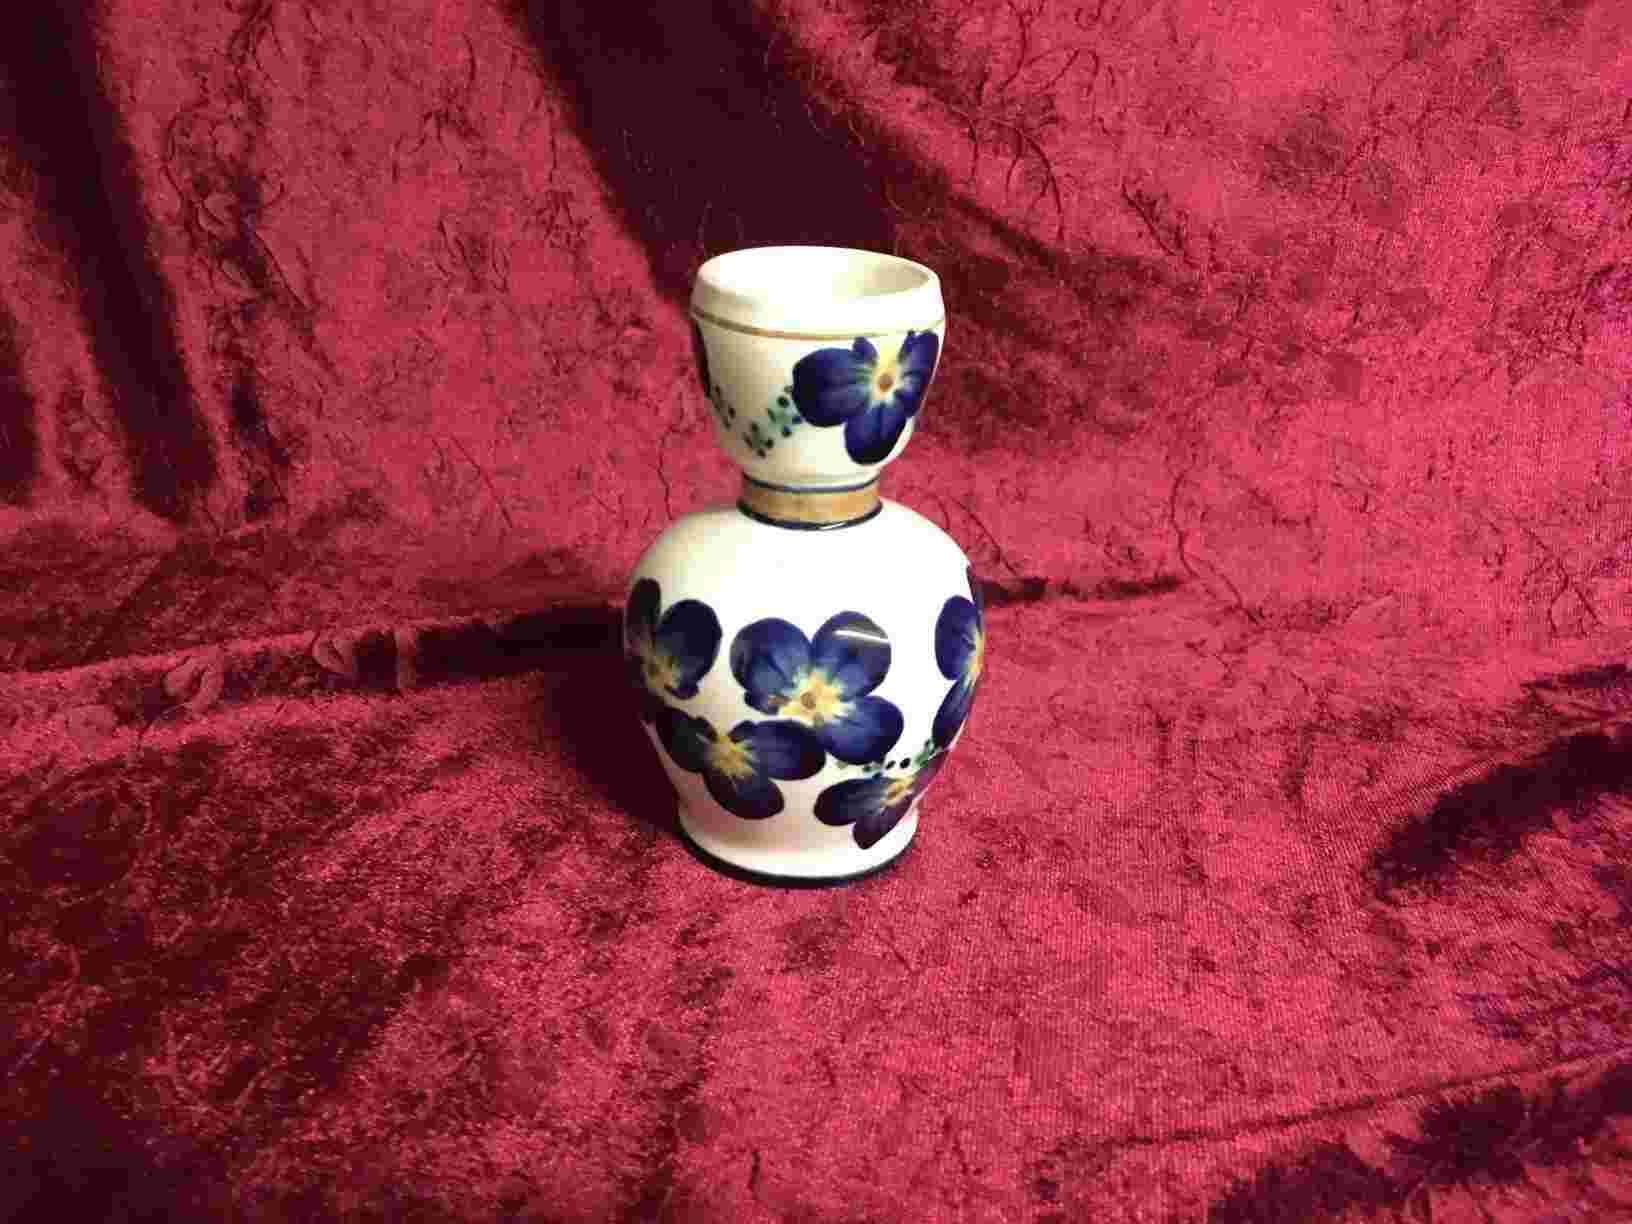 Aluminia - Miniature vase 378/282, formgivet af Harald Slott-Møller i 1903, dekoration ”Kobberkant med violer med gult”, 12 cm høj, i perfekt stand. Solgt